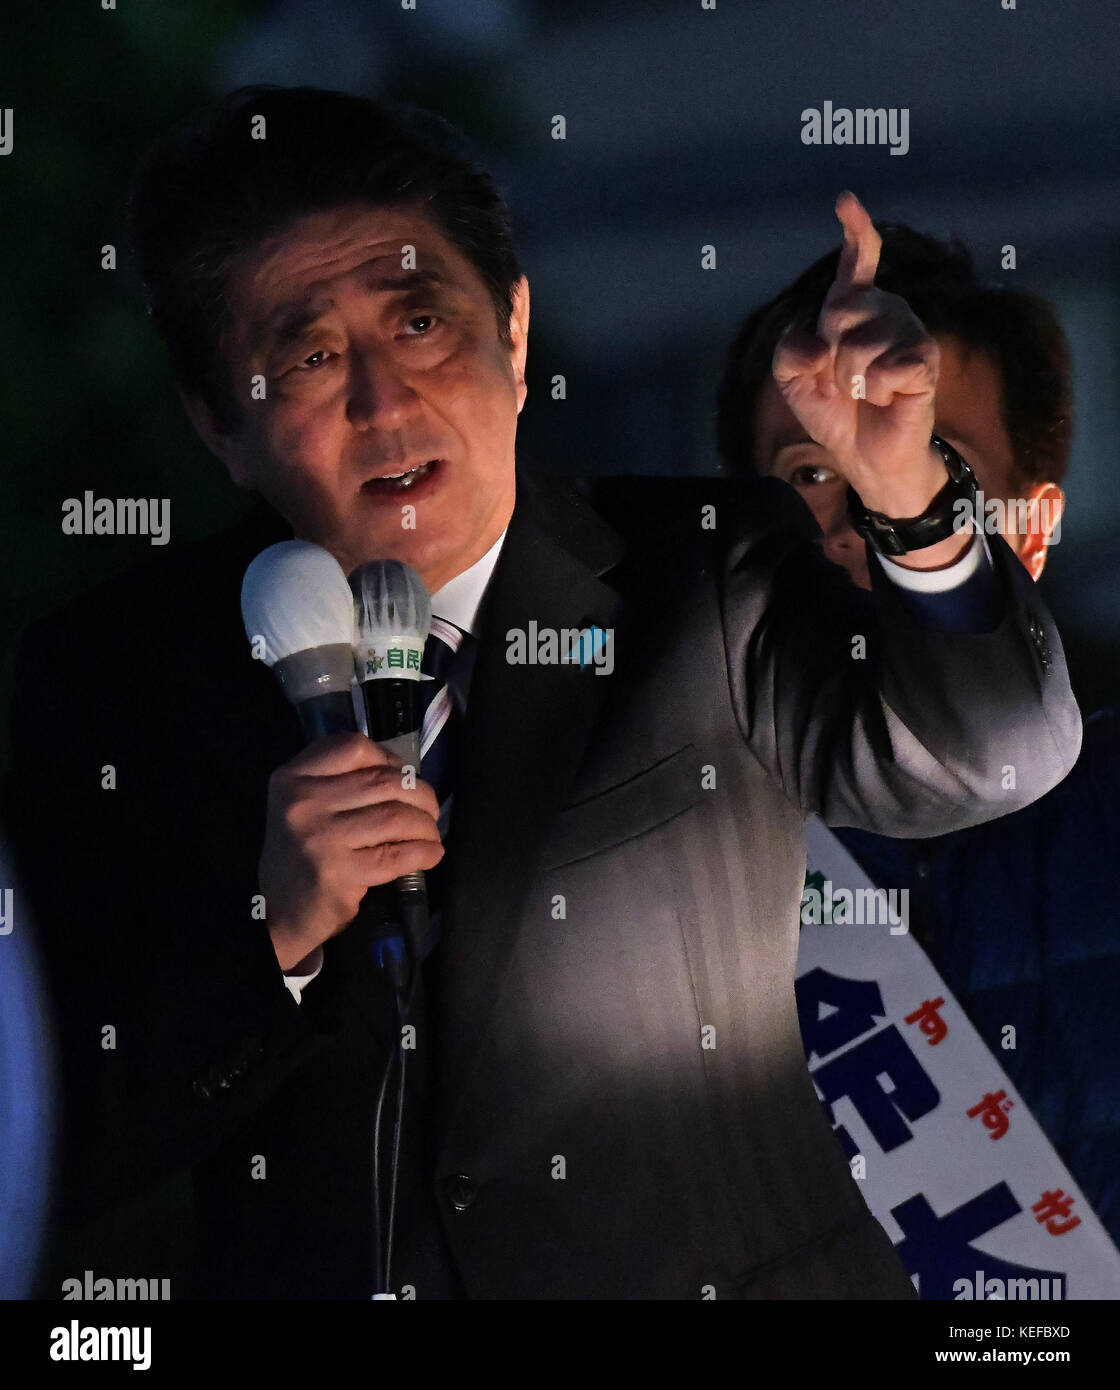 Shinzo Abe, October 18, 2017, Tokyo, Japan : Japan's Prime Minister Shinzo Abe speaks during the stump speech near the Ikebukuro Station in Tokyo, Japan on October 18, 2017. Stock Photo